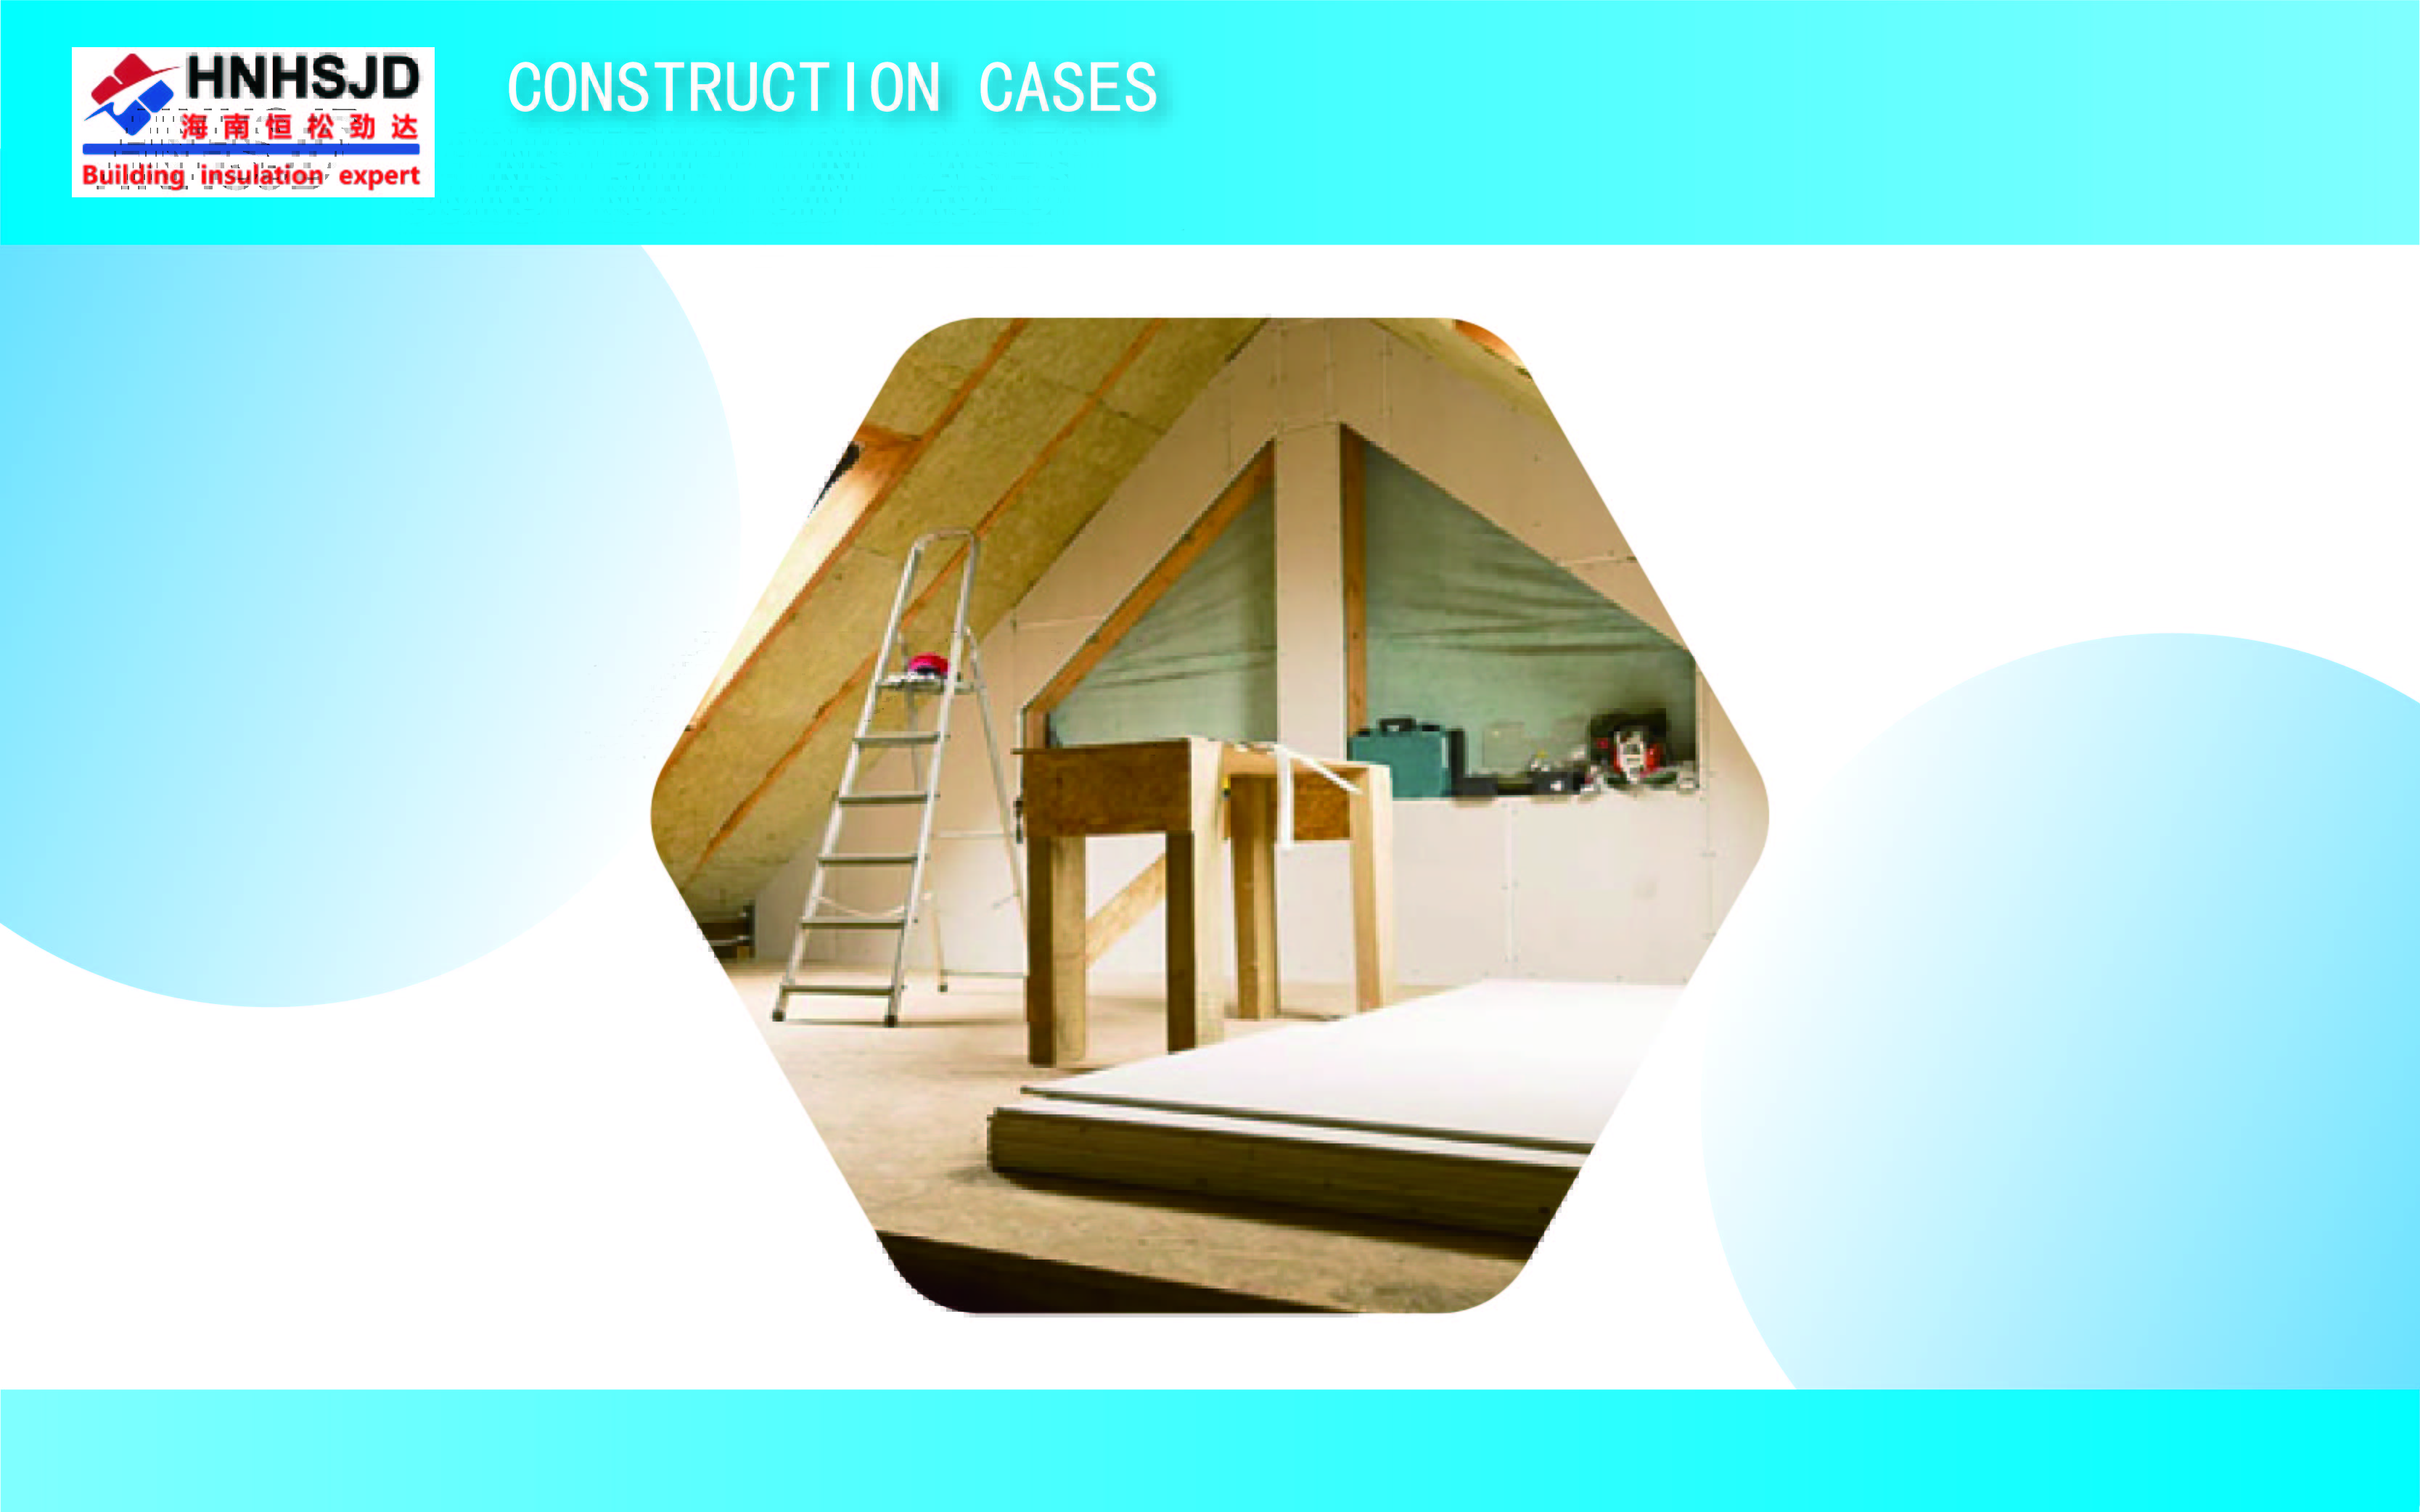 Construction Cases